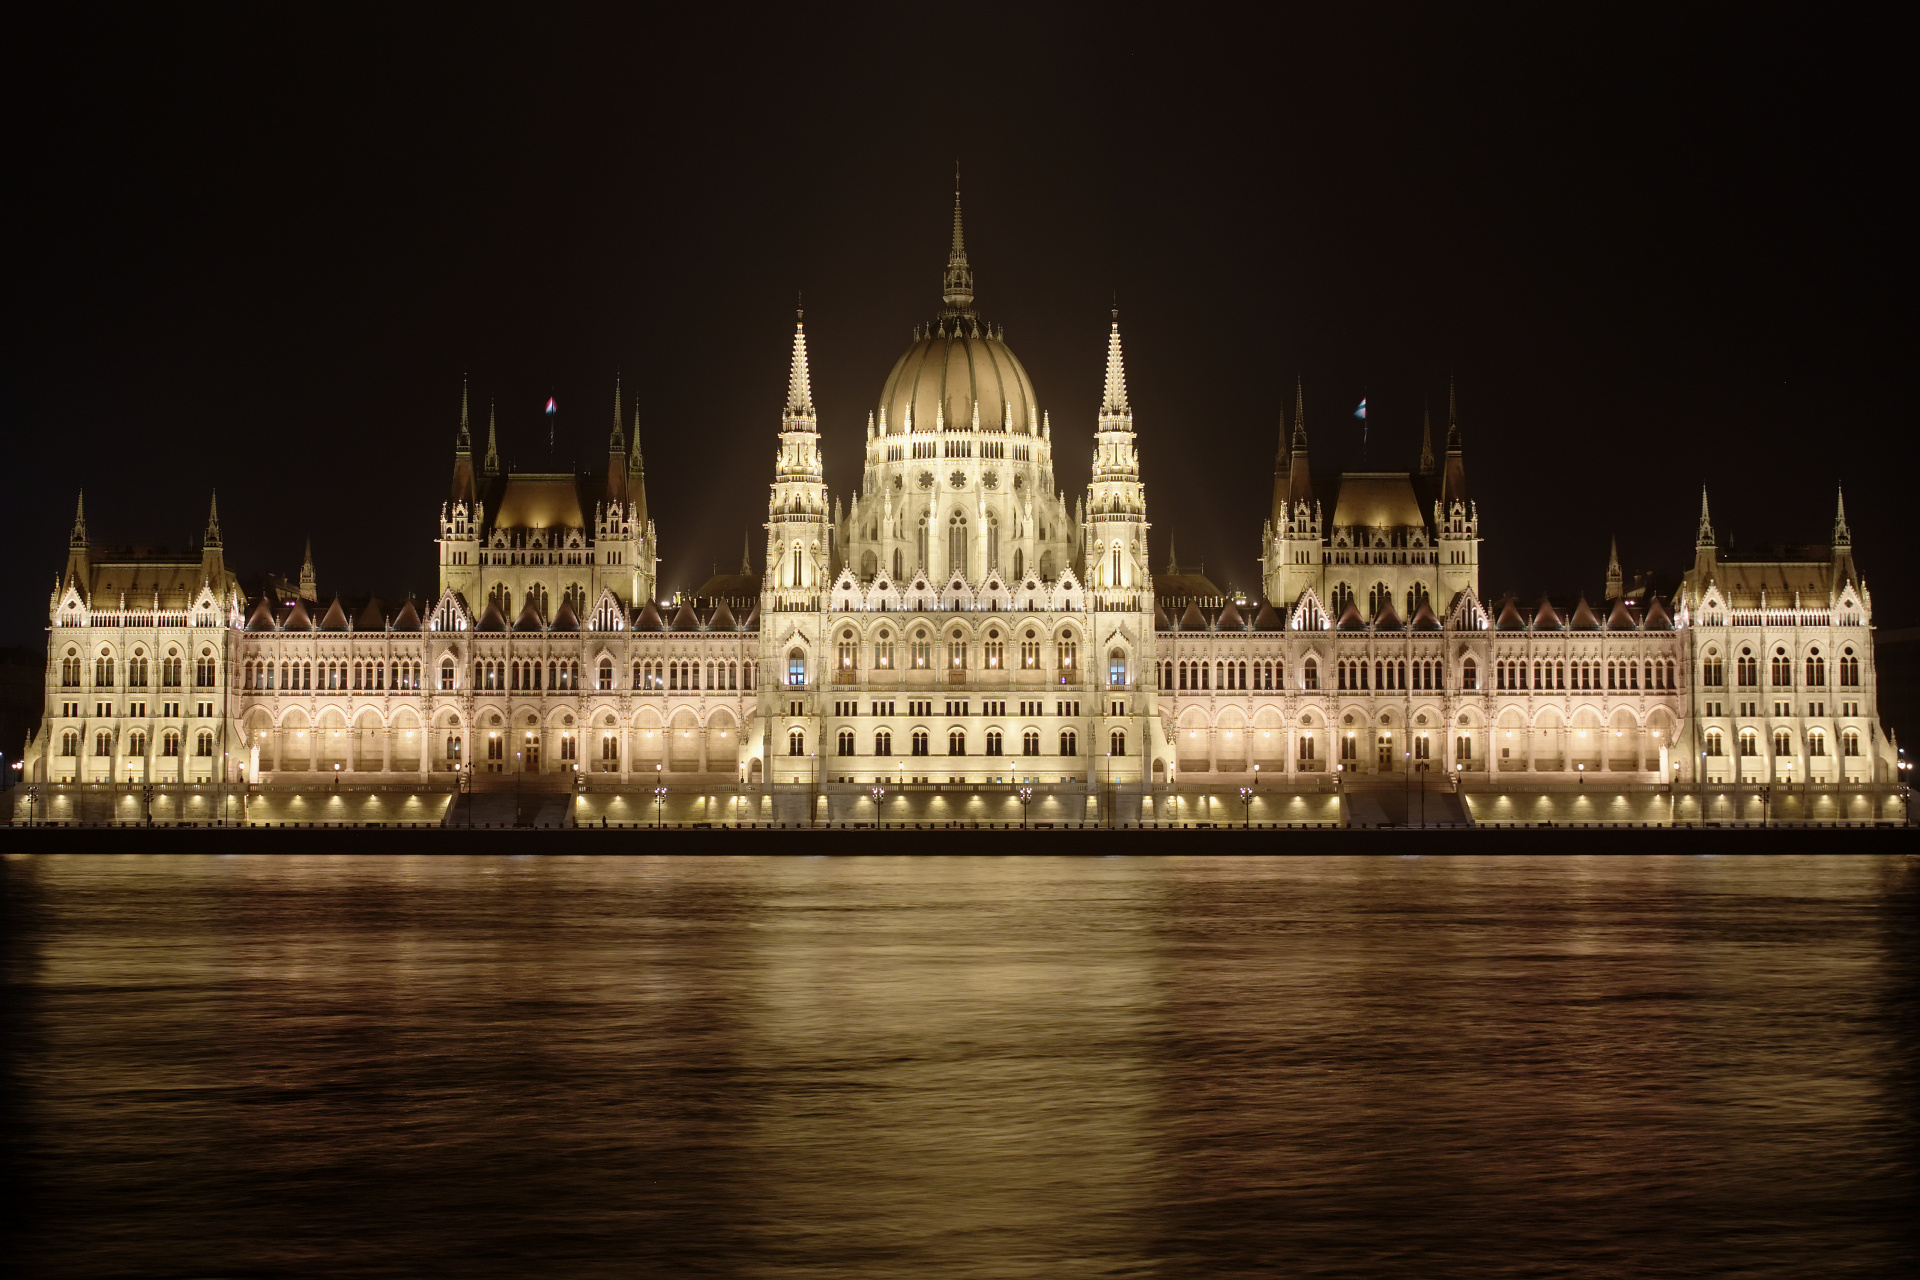 Országház - The Parliament Building (Travels » Budapest » Budapest at Night)